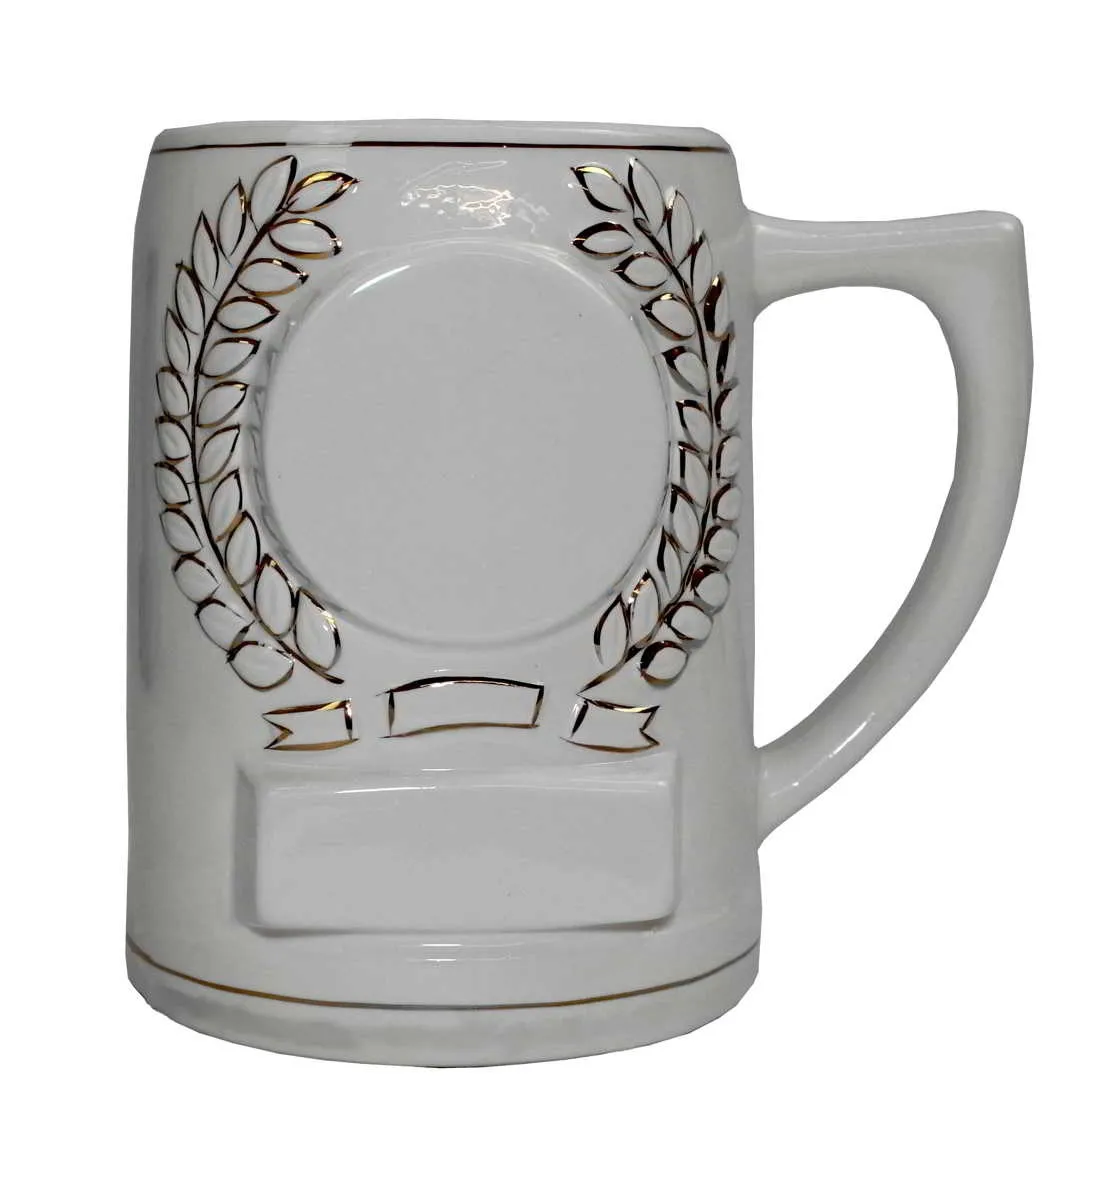 Beer mug | Beer mug cup